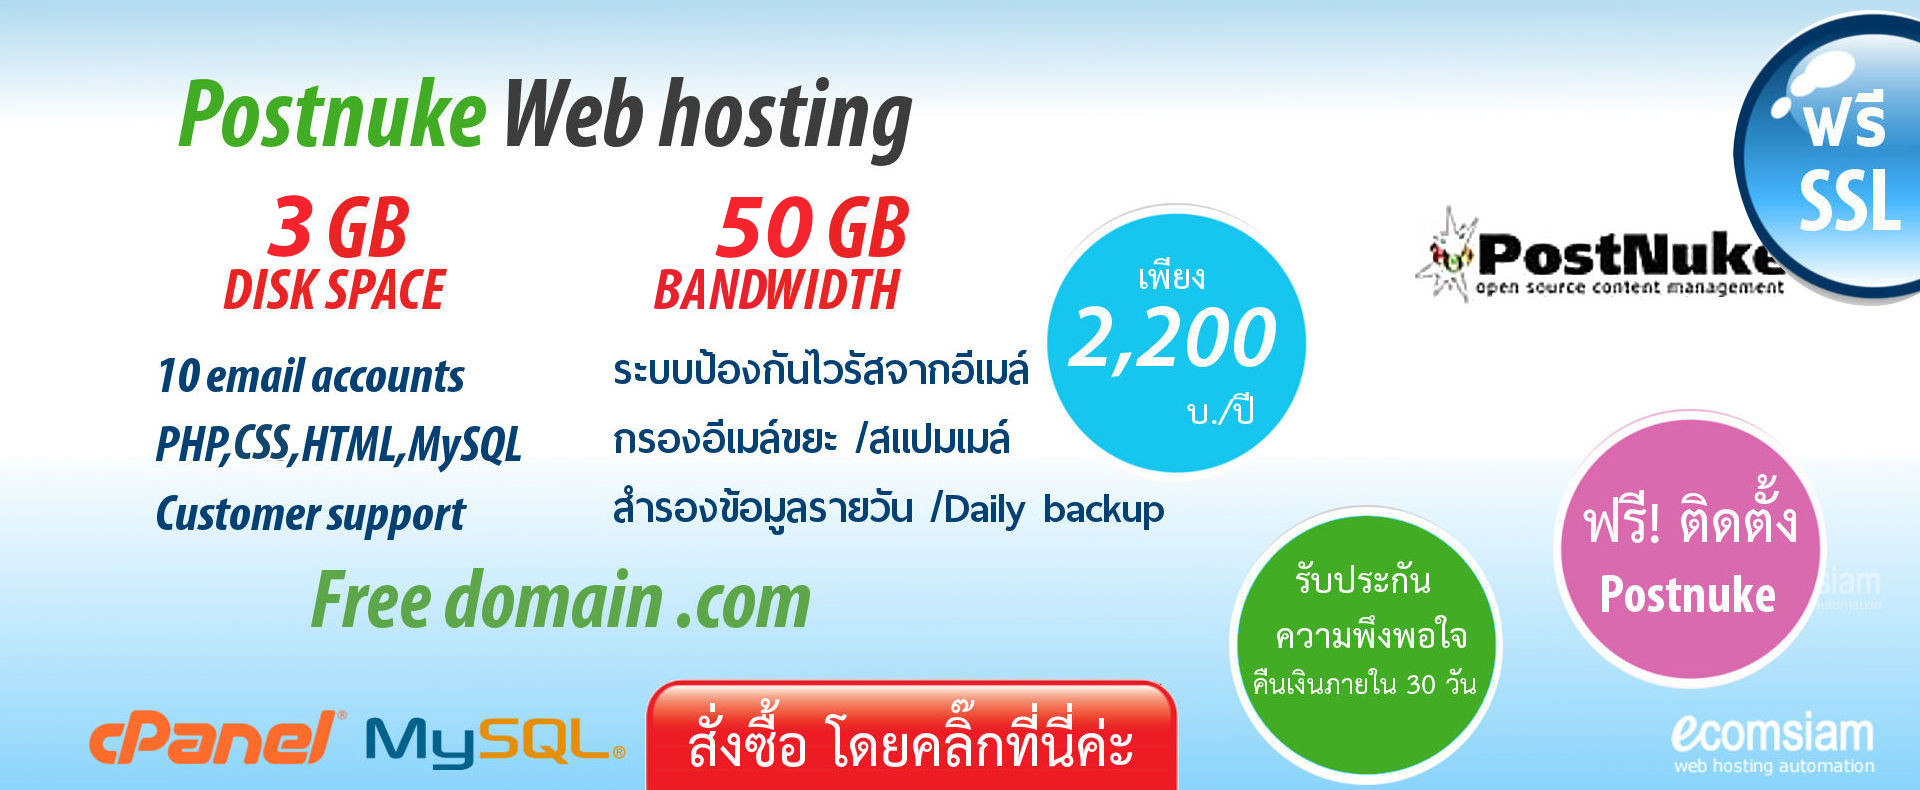 postnuke web hosting thailand -เว็บโฮสติ้ง ฟรีโดเมน ฟรี SSL - แนะนำ webhosting.com.co.th web hosting thailand - Support ลูกค้า บริการดี ดูแลดี